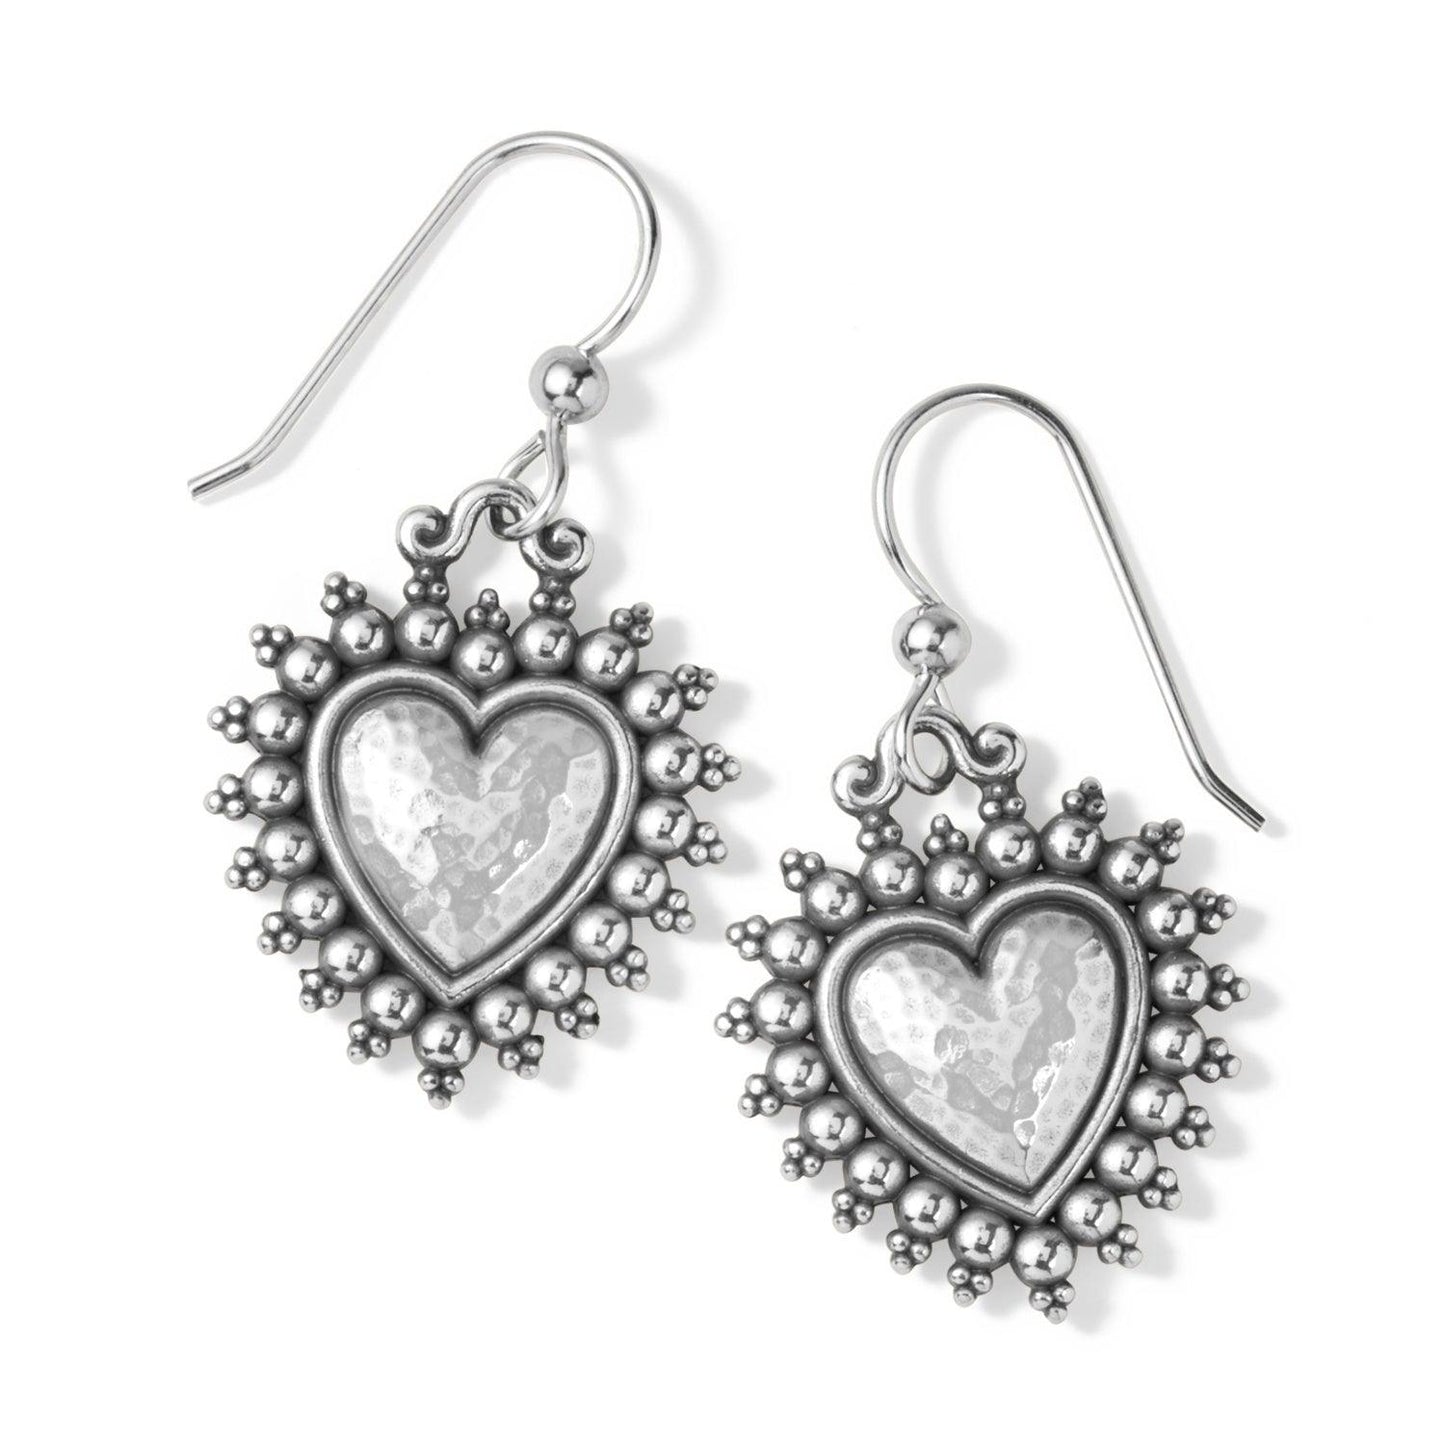 Telluride Heart French Wire Earrings - The Silver Dahlia